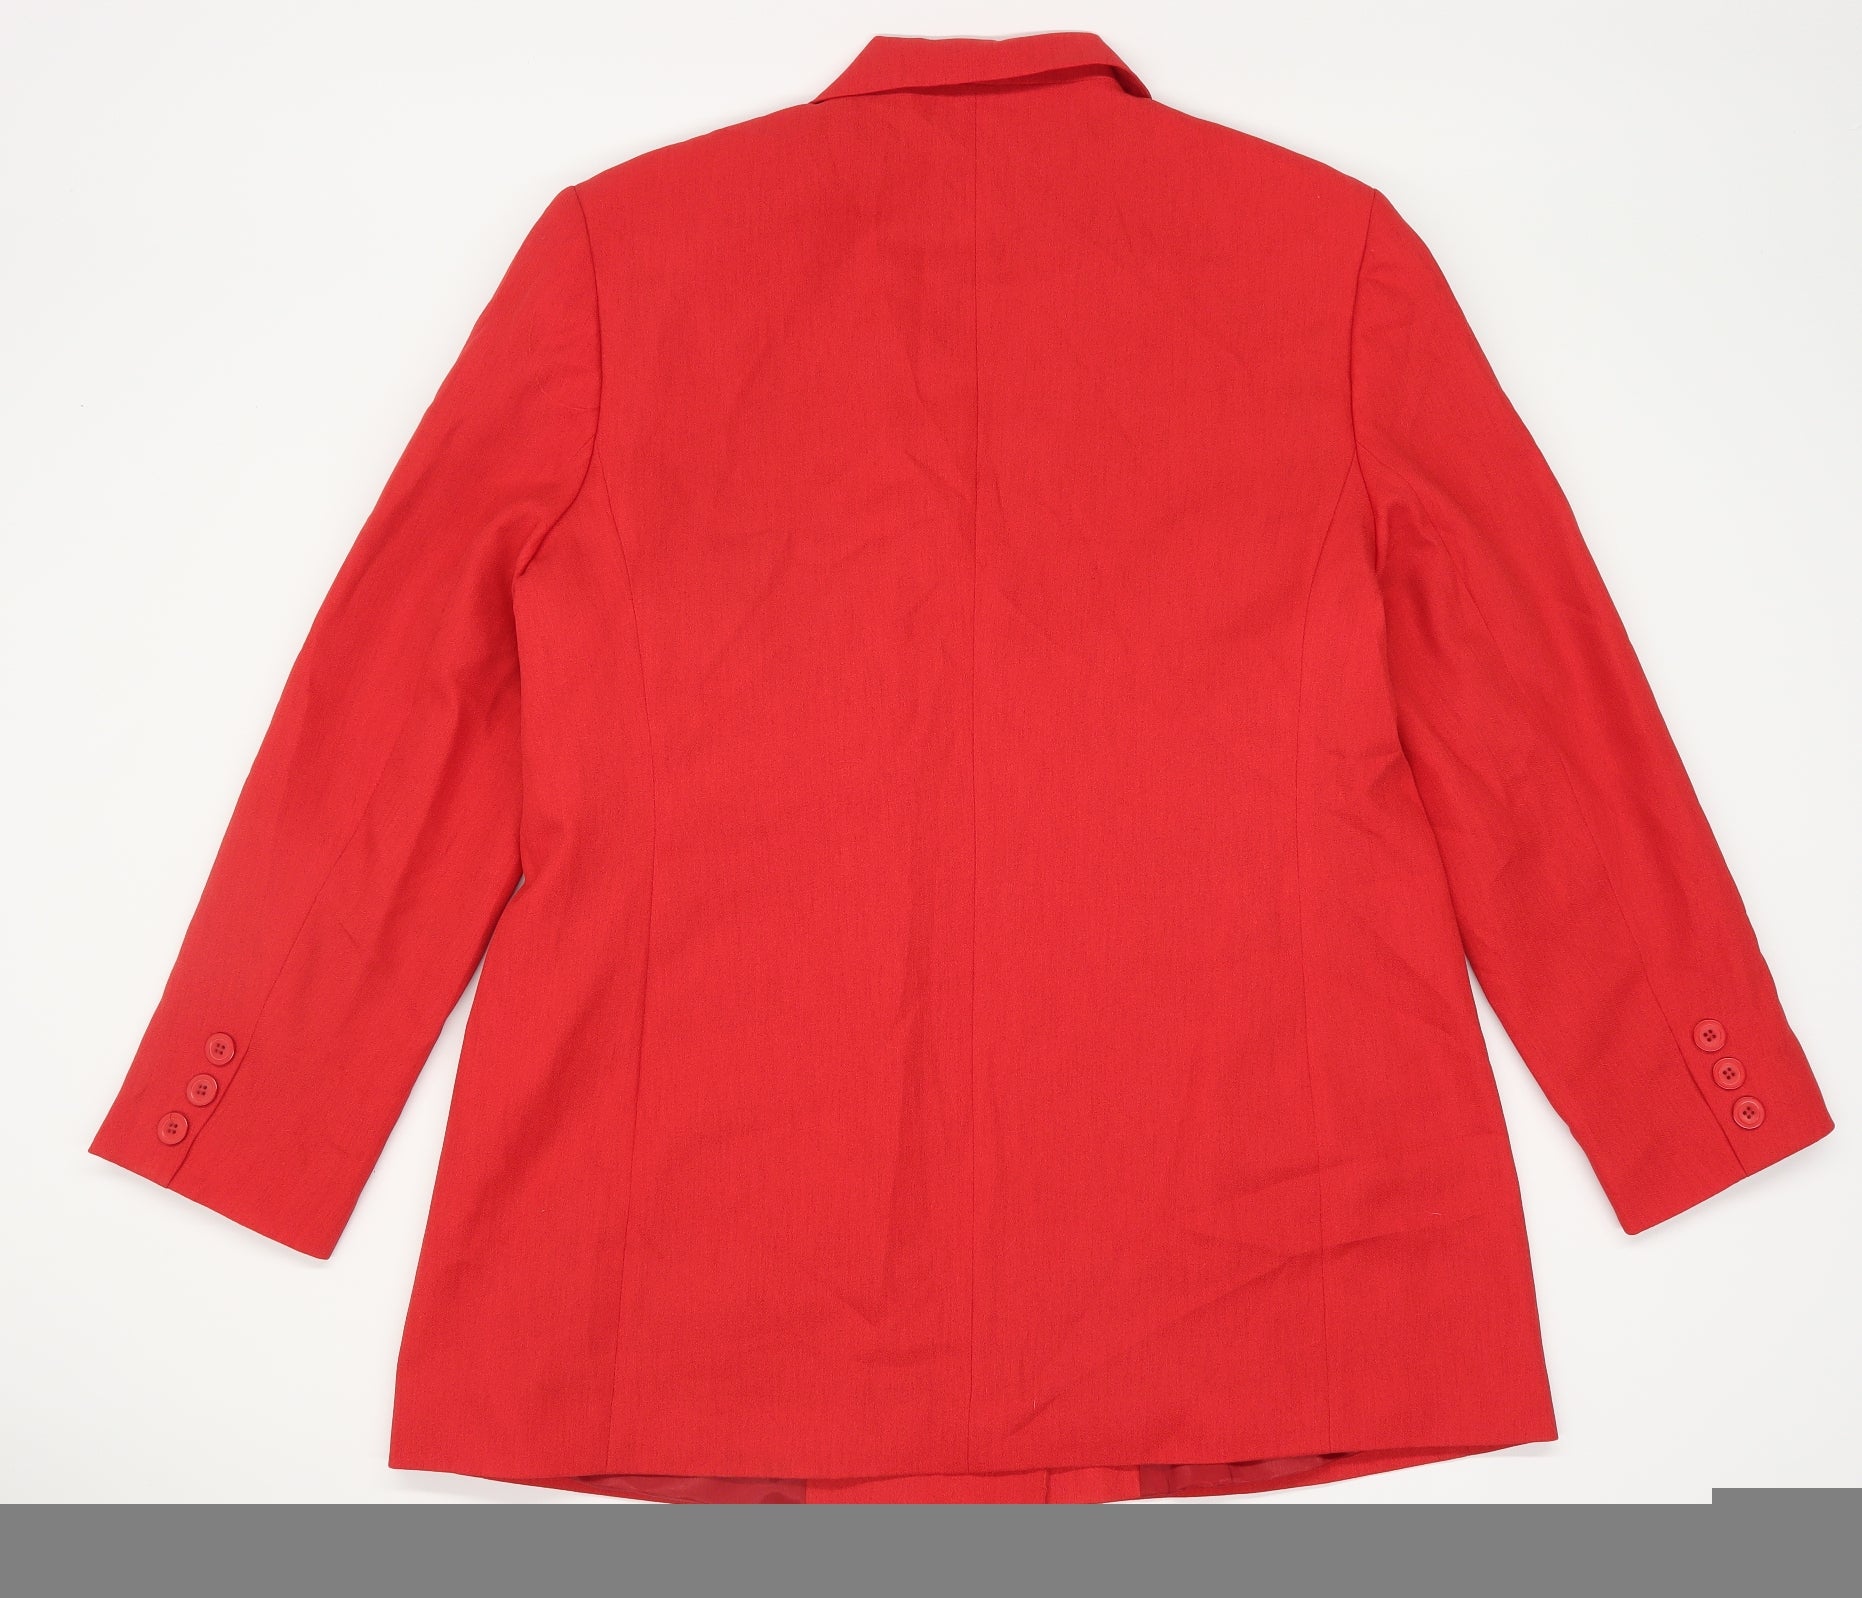 C&A Women's Parka Coat Polyester Parka Coat, red : : Fashion